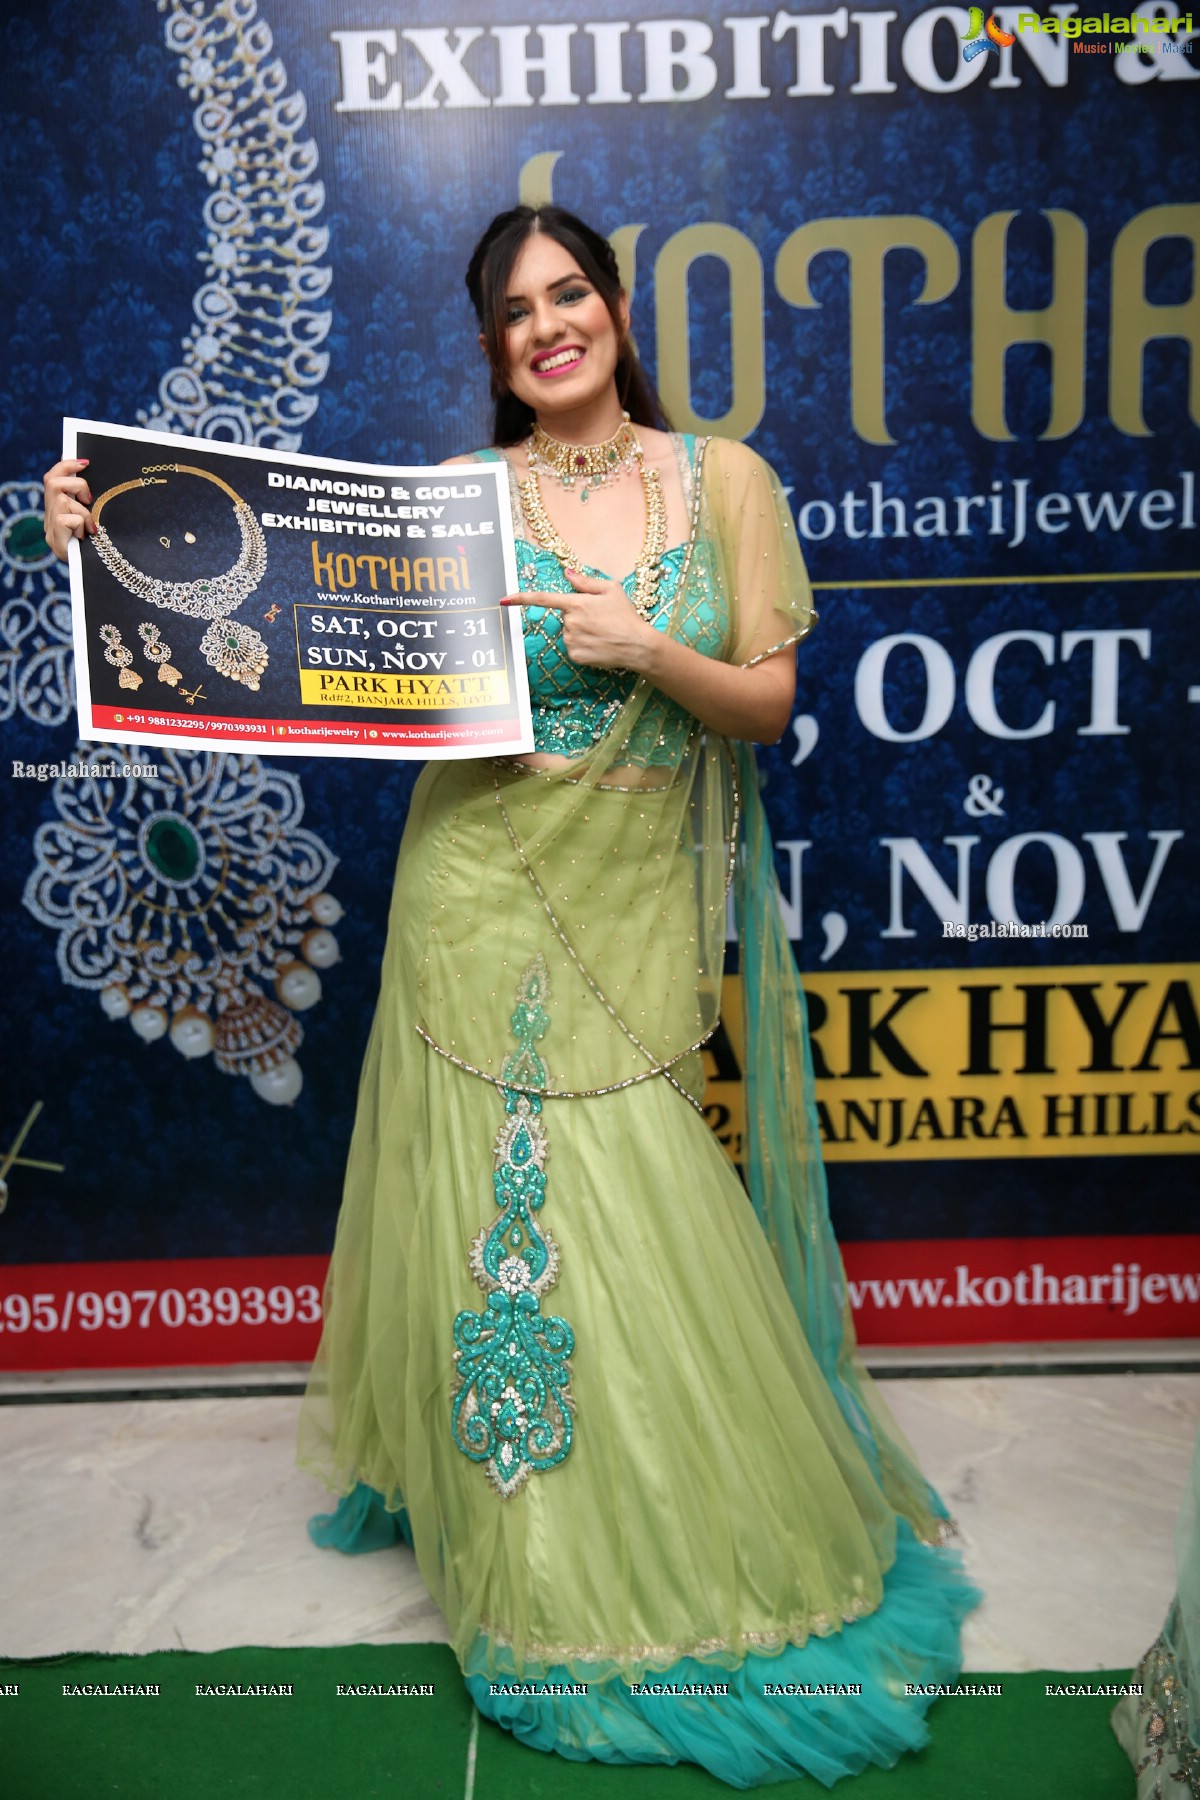 KothariJewelry.com - Diamond & Gold Jewellery Exhibition & Sale 2020 Curtain Raiser